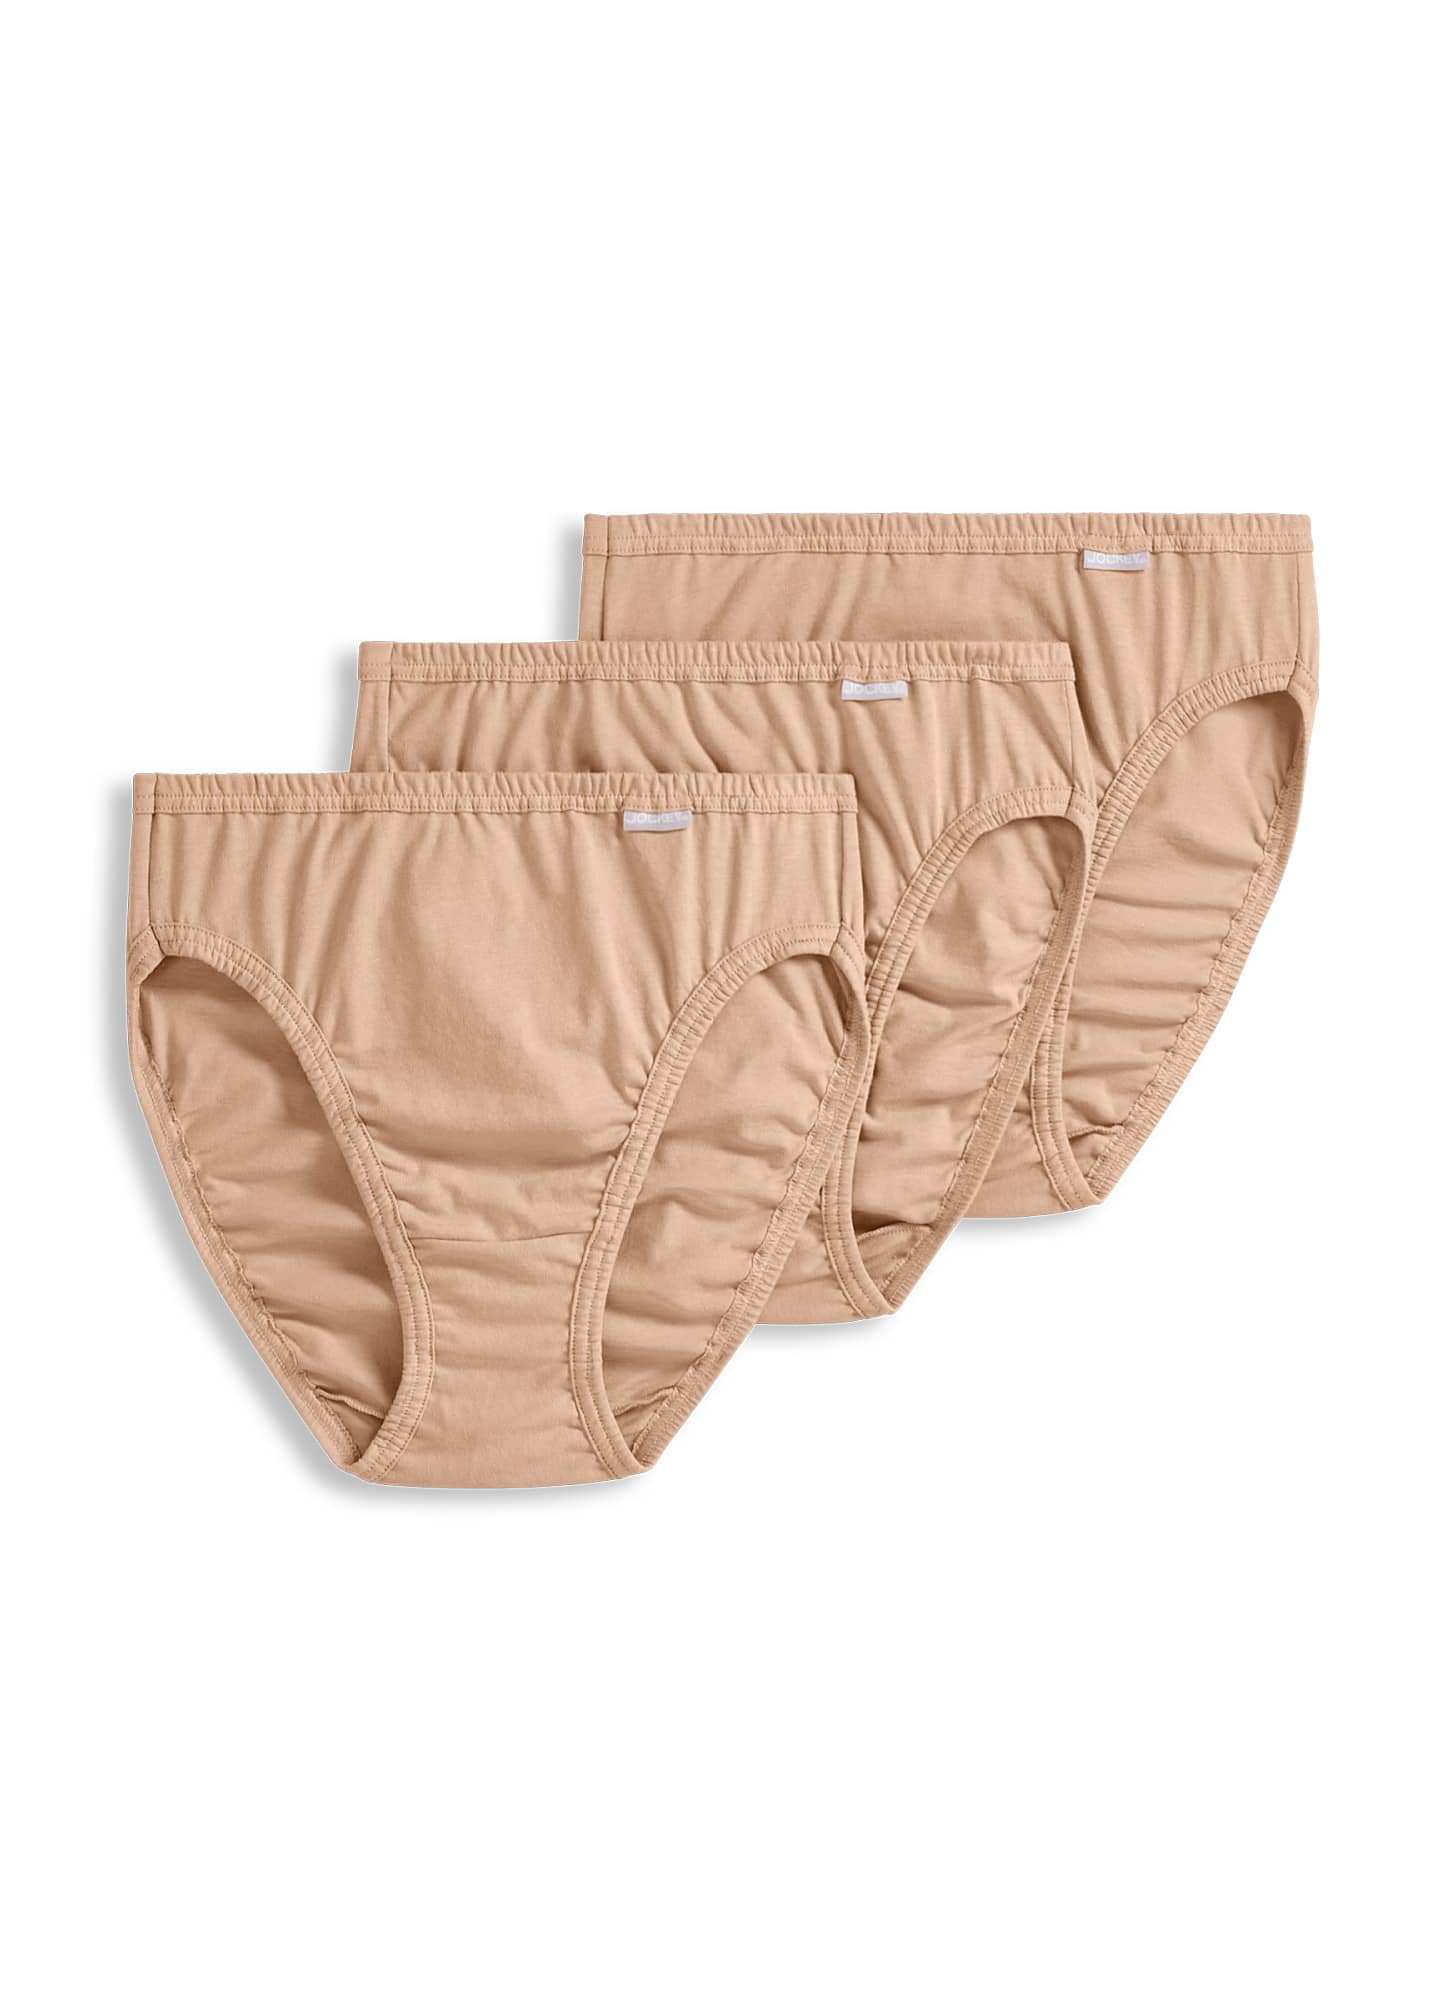 Jockey® Elance® French Cut Women's Underwear, 3 pk - Fred Meyer